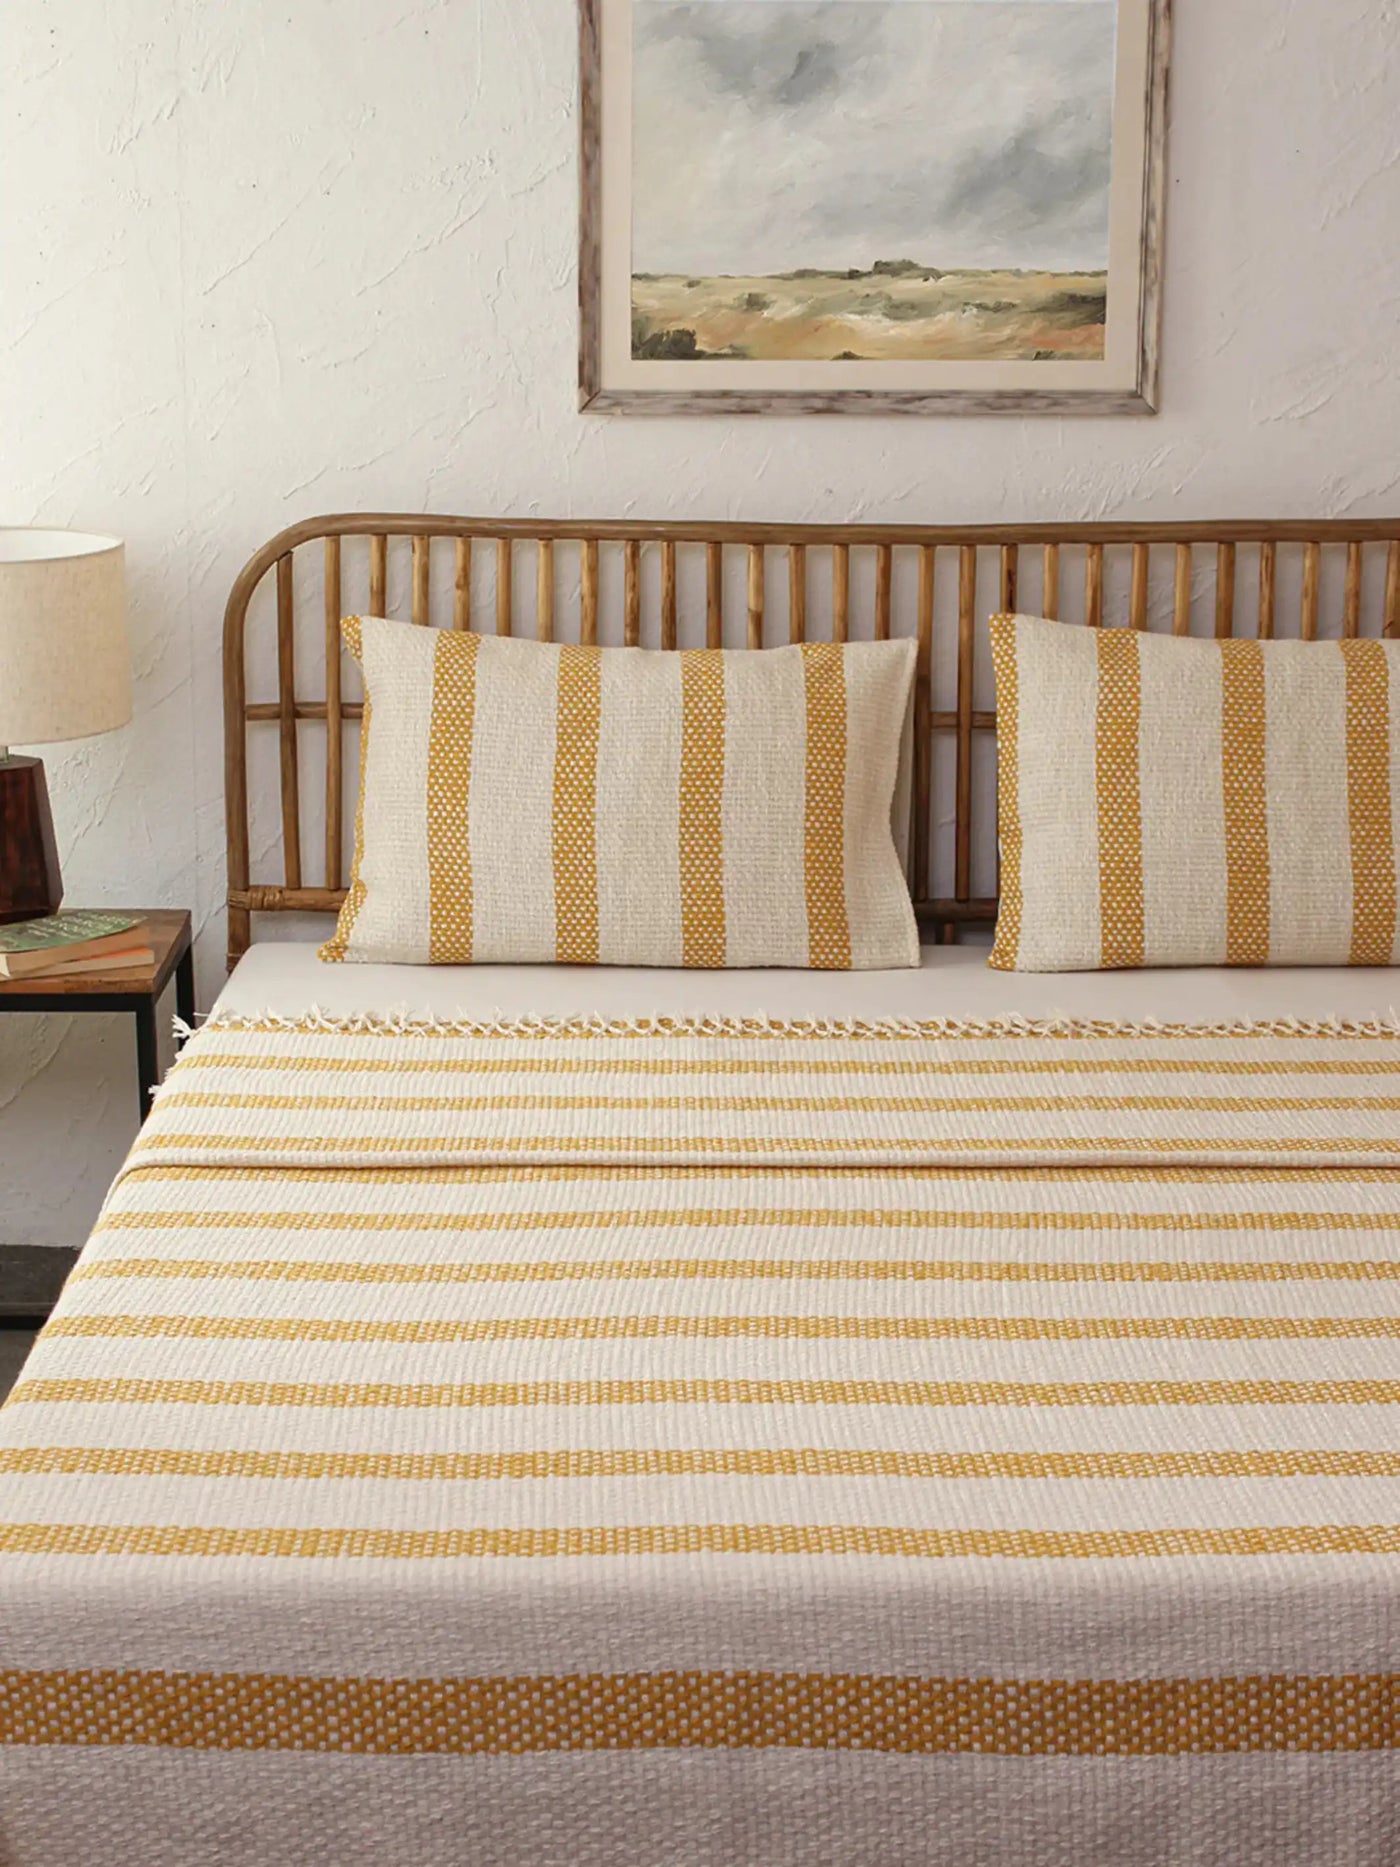 Bedcover - Shivalik Yellow